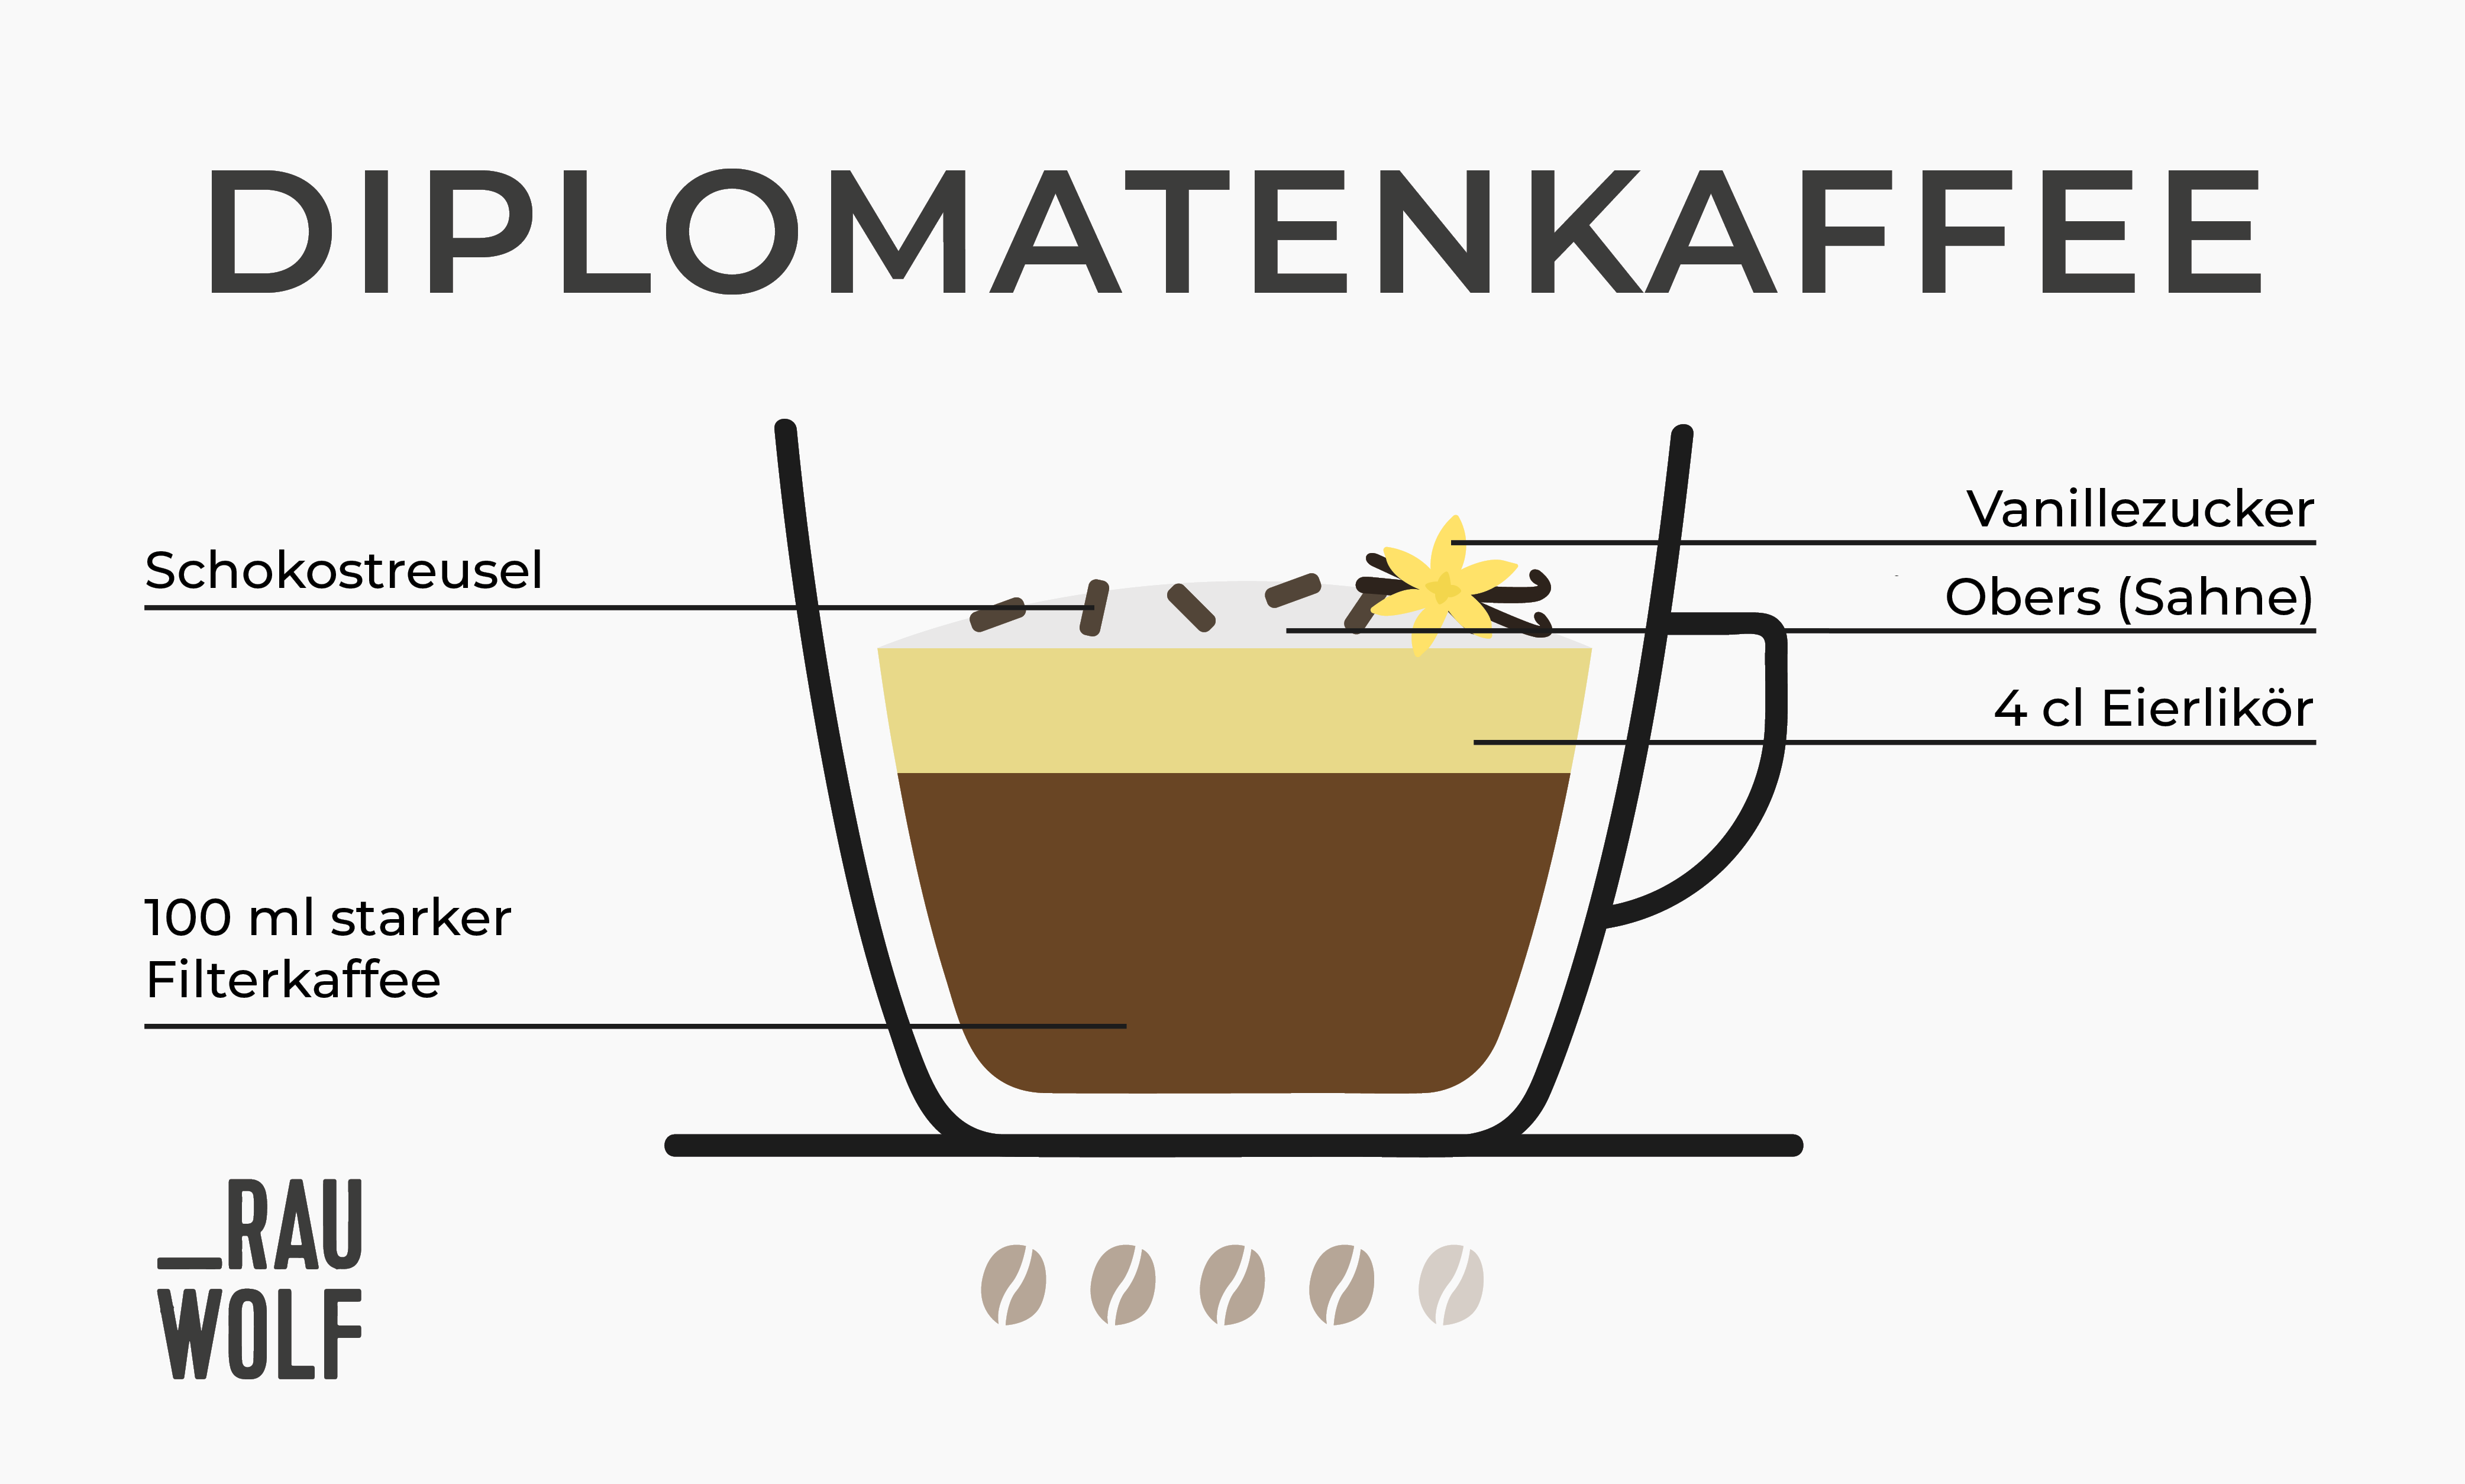 Kaffee mit Alkohol: Diplomatenkaffee